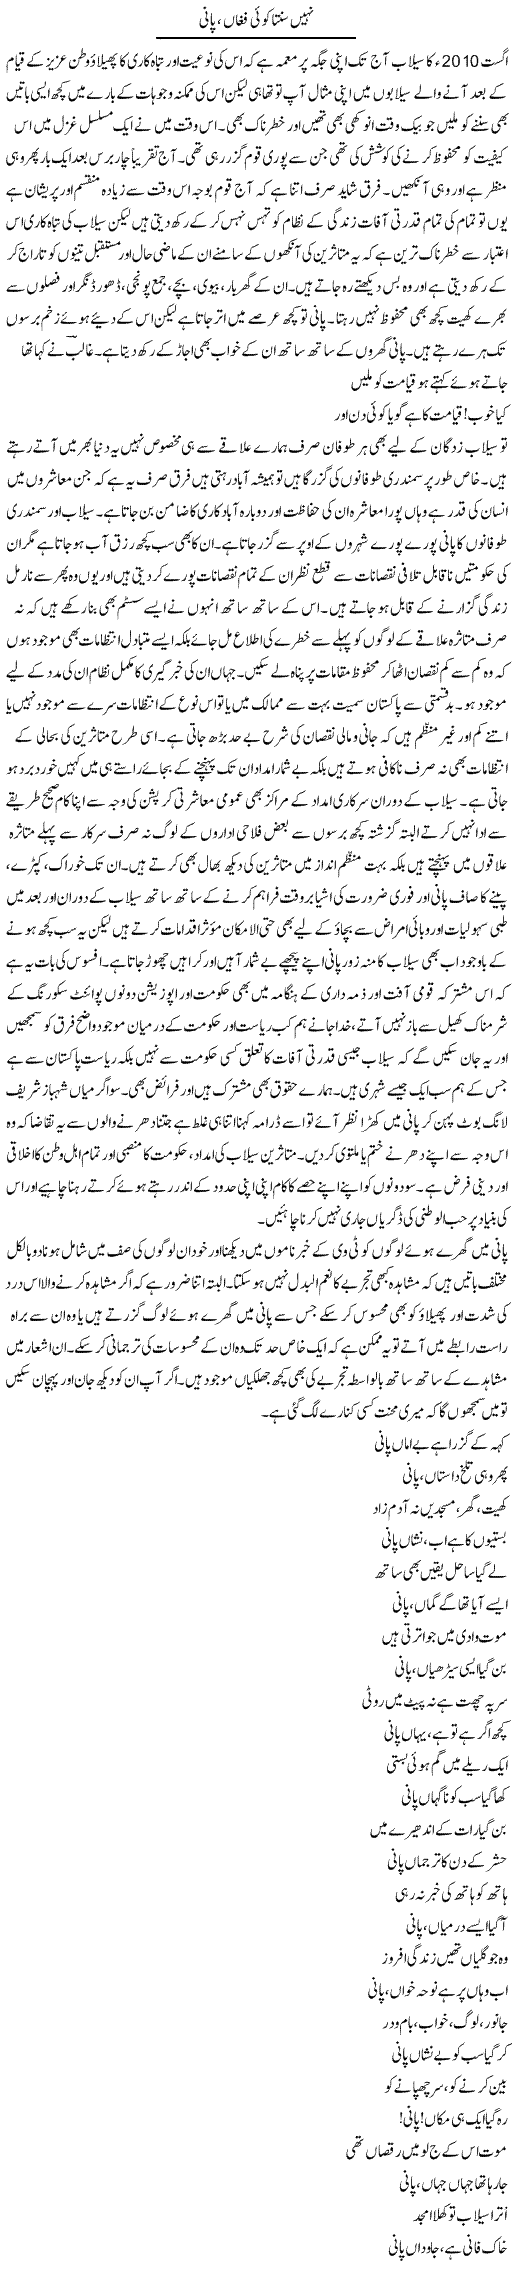 Nahi Sunta Koi Fughan, Pani | Amjad Islam Amjad | Daily Urdu Columns